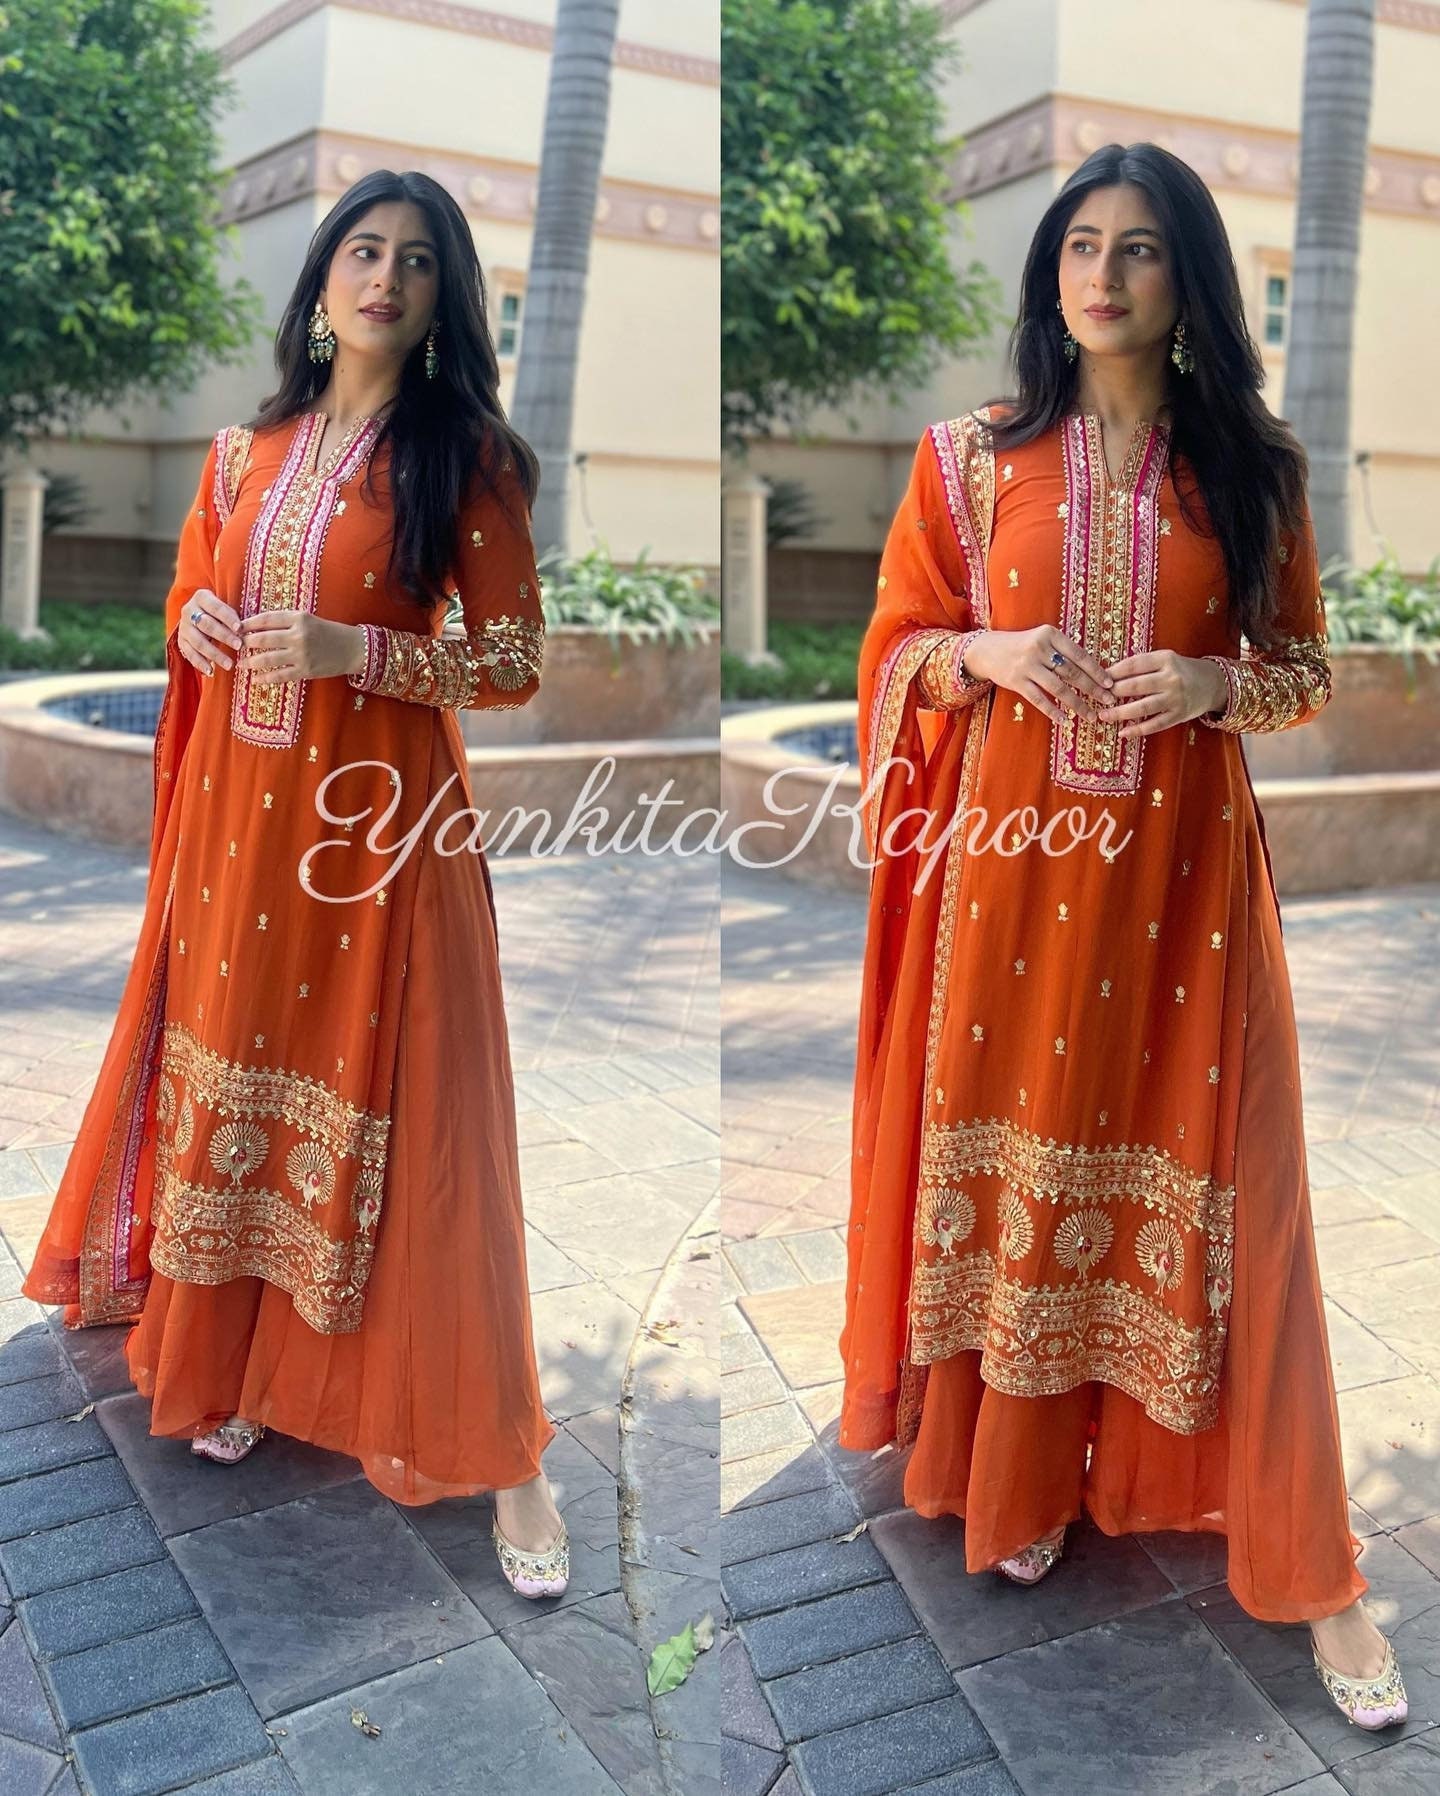 Yankita Kapoor Wear Orange Kurti With Lehenga